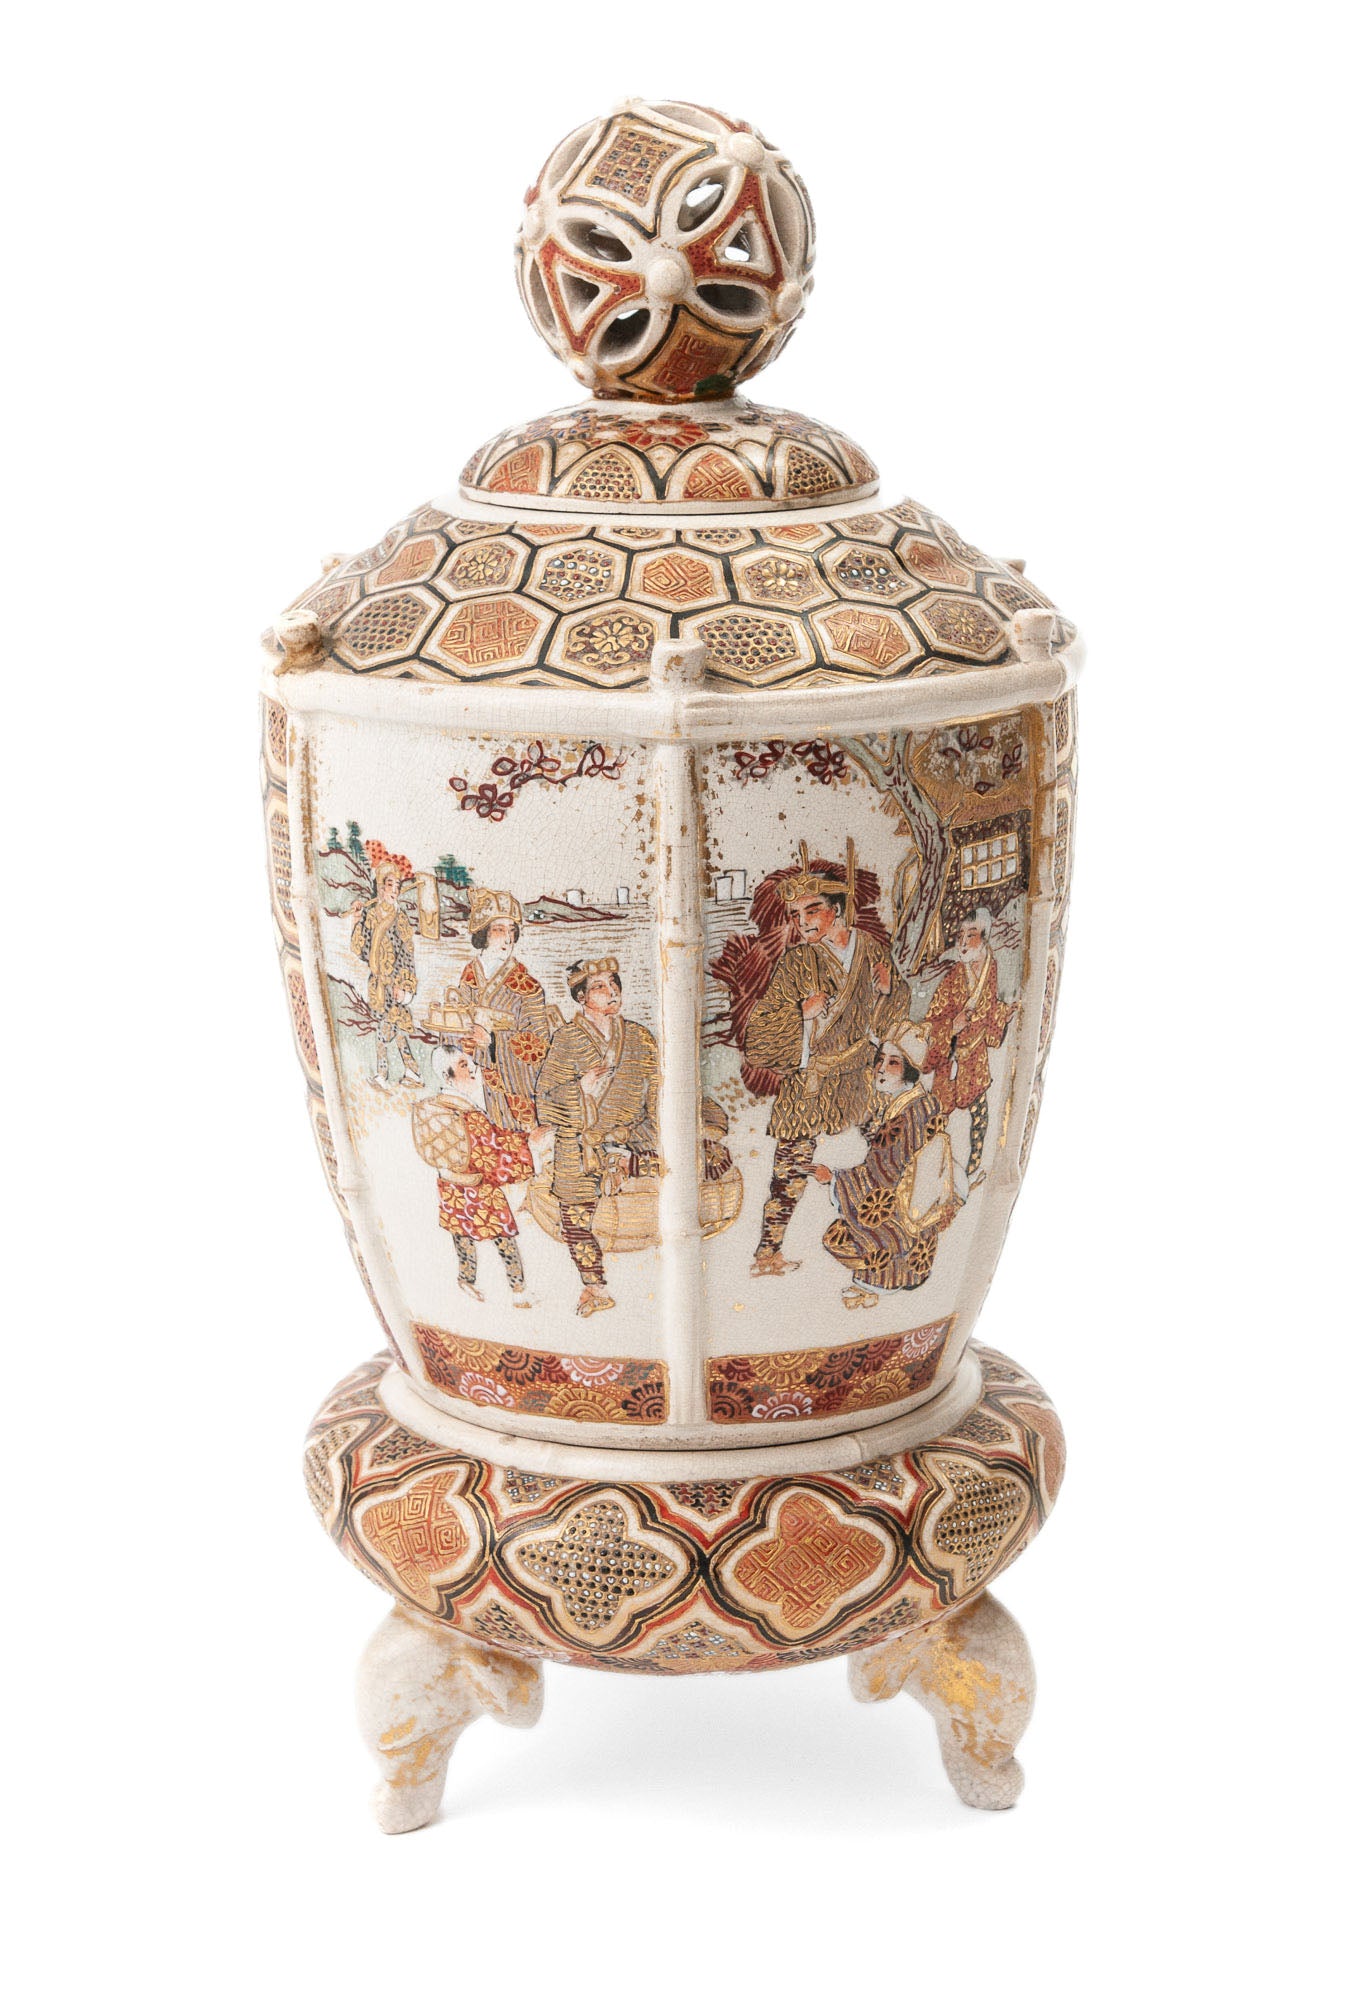 Antique Meiji Japanese Satsuma Pottery Moriage Lidded Jar / Vase - Pierced Knop (Code 1197)